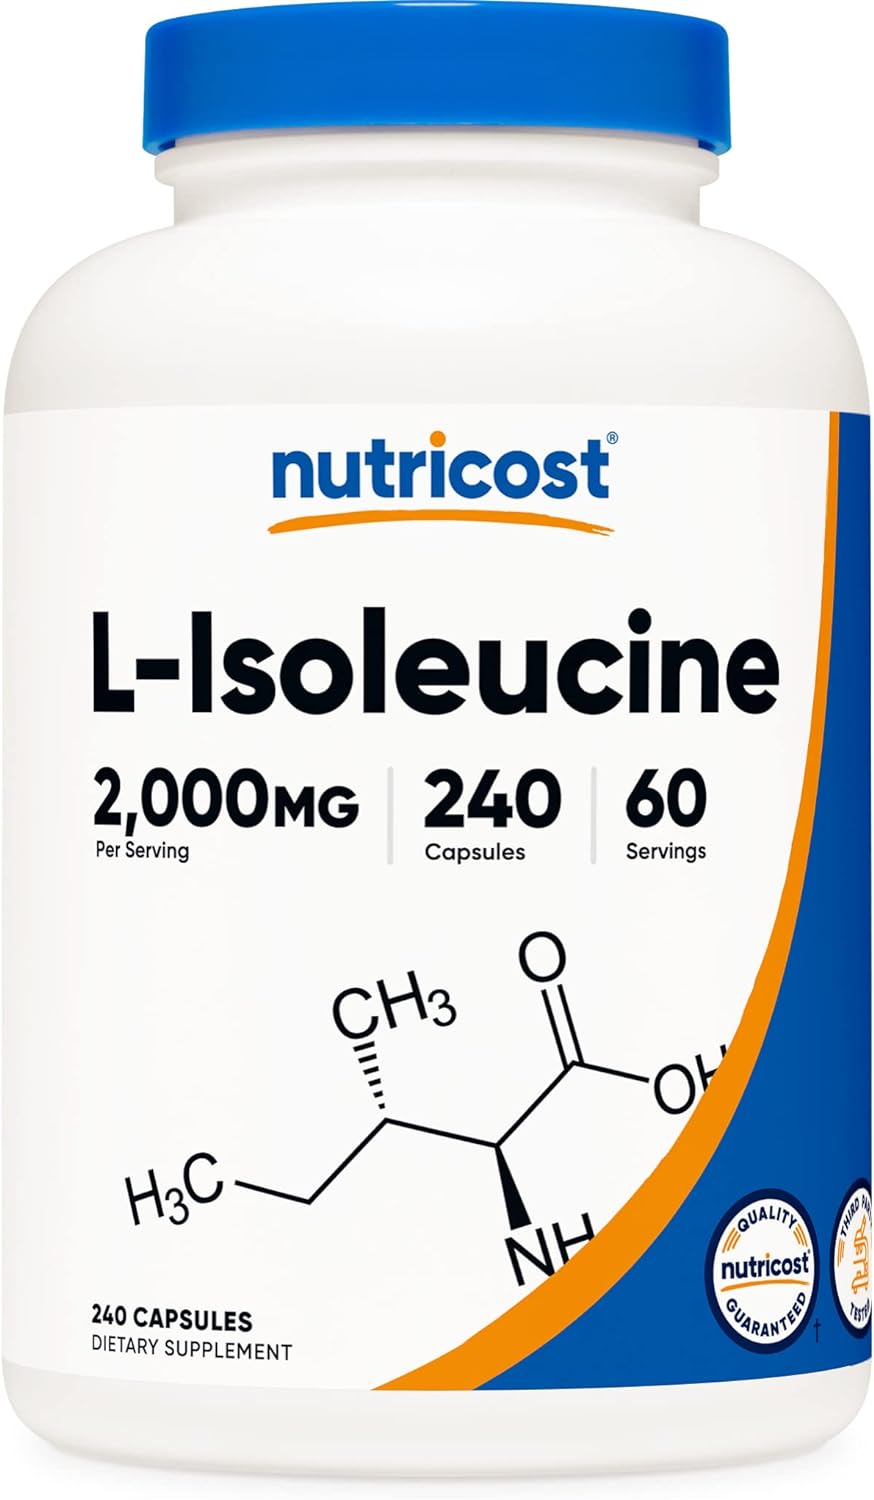 Nutricost L-Isoleucine 2000mg Per Serving, 240 Capsules (60 Servings)2